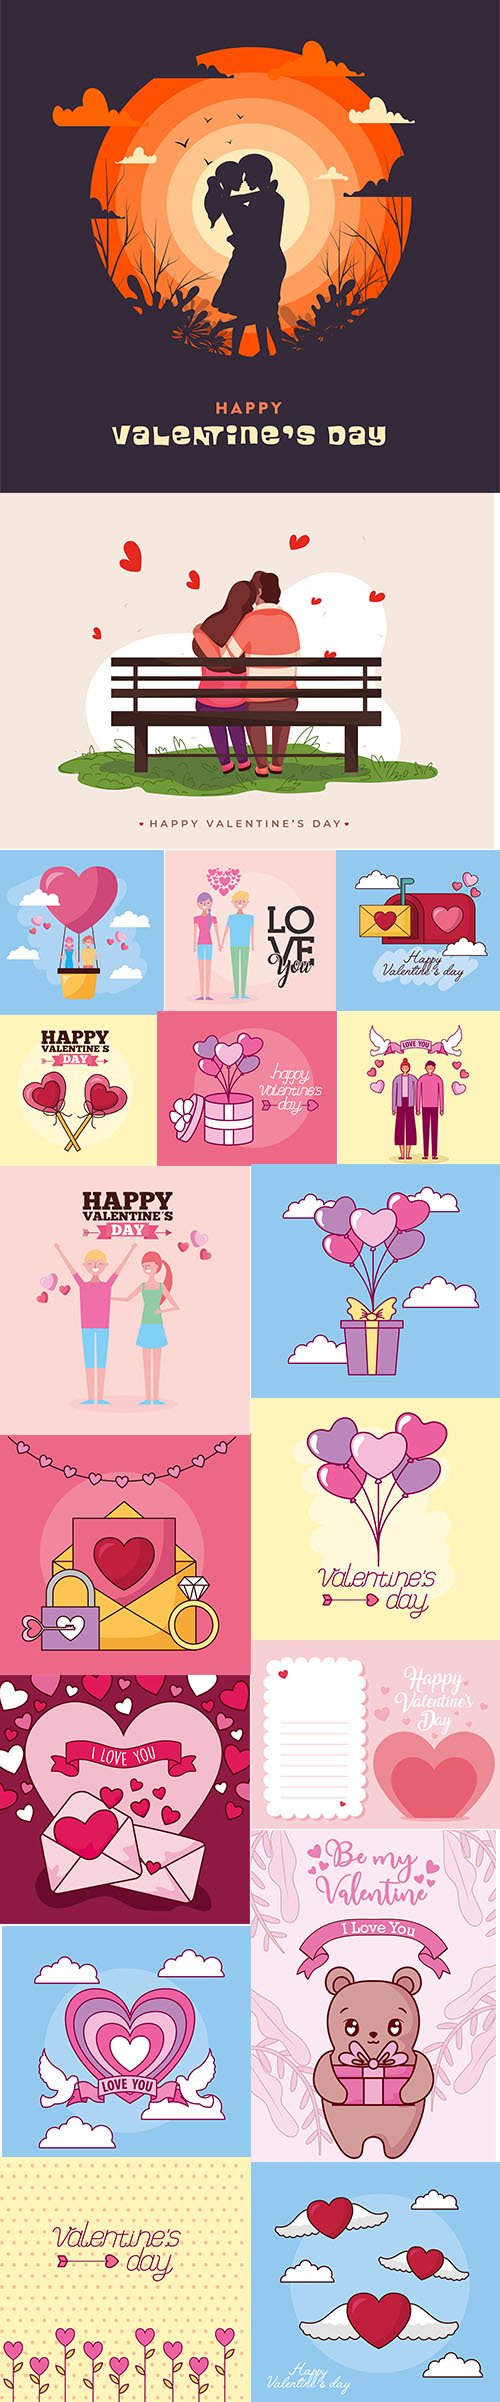 Set of Romantic Valentines Day Illustrations Vol 9